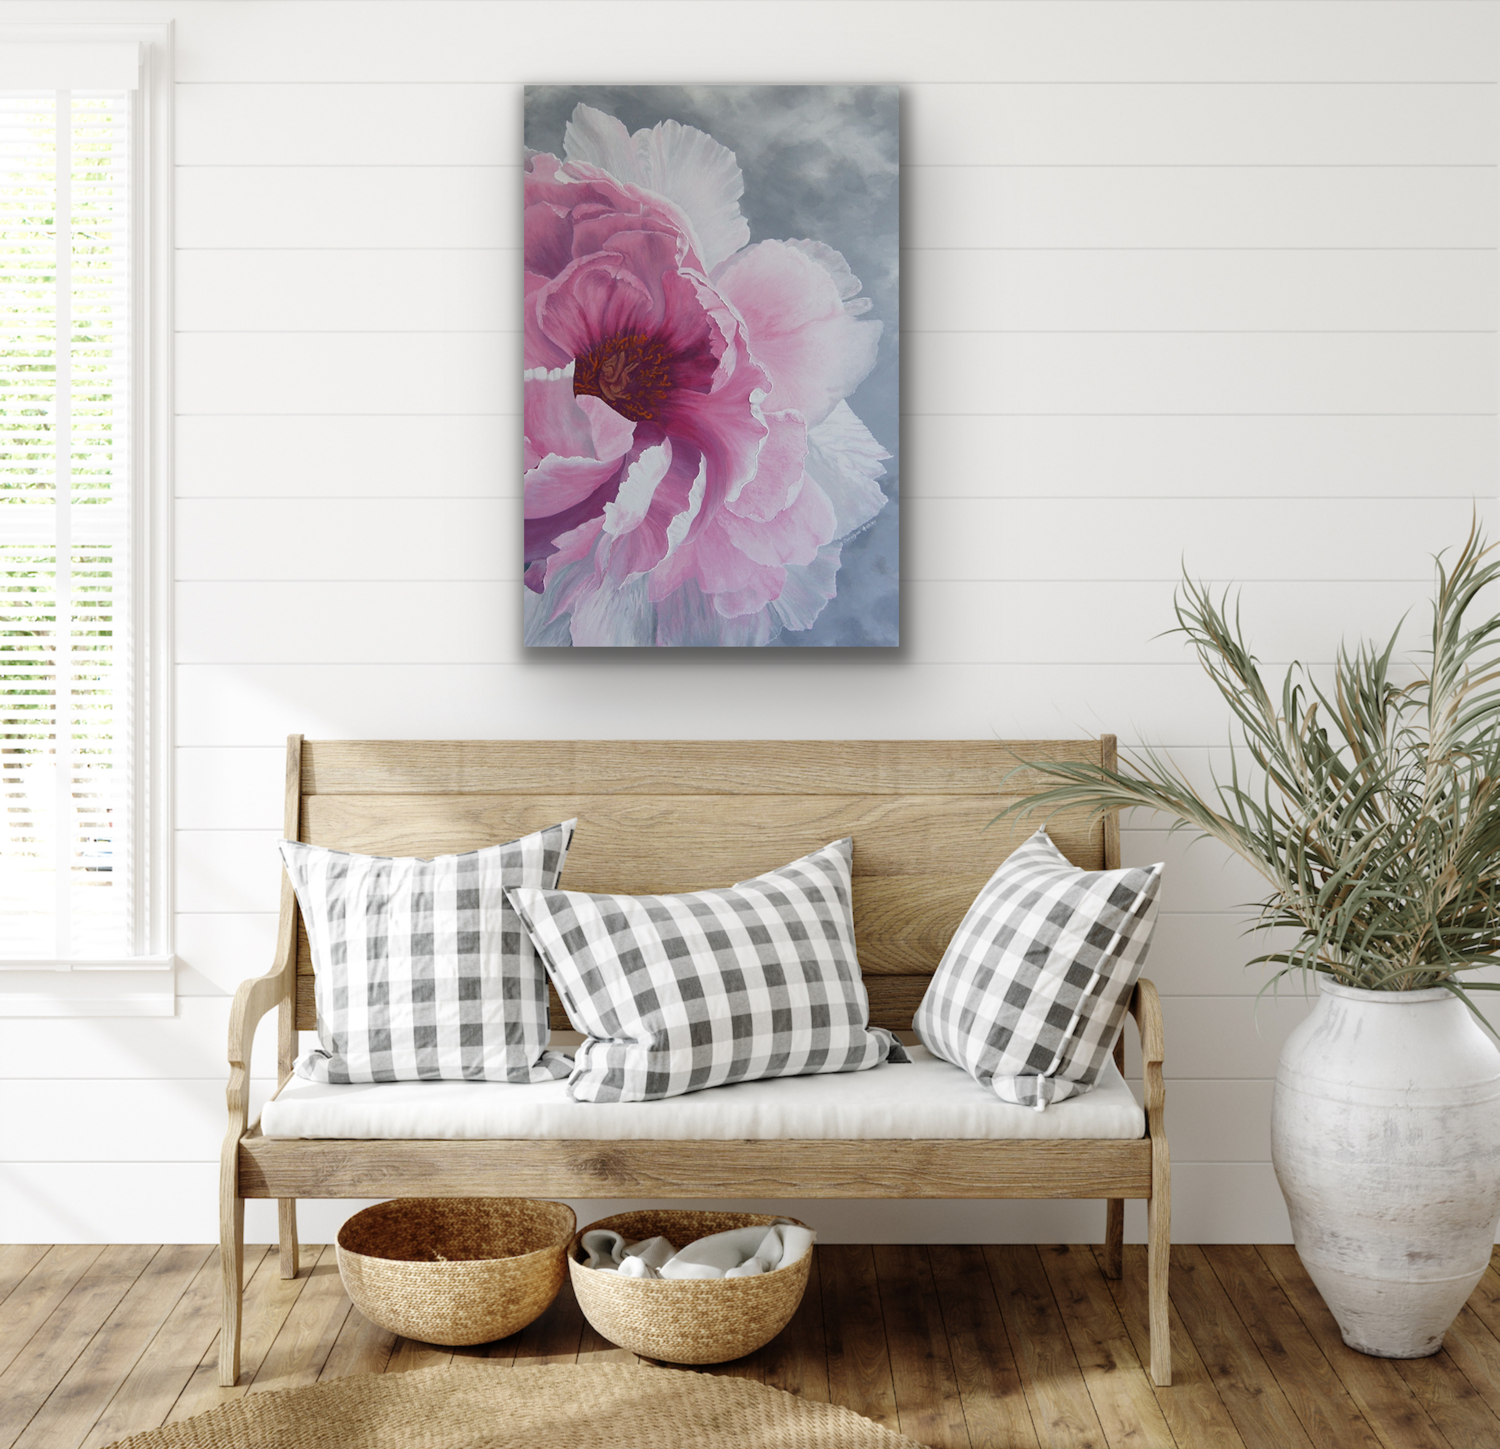 "Serenity" work of art will look great in your hallway, dining room, living room or bedroom.